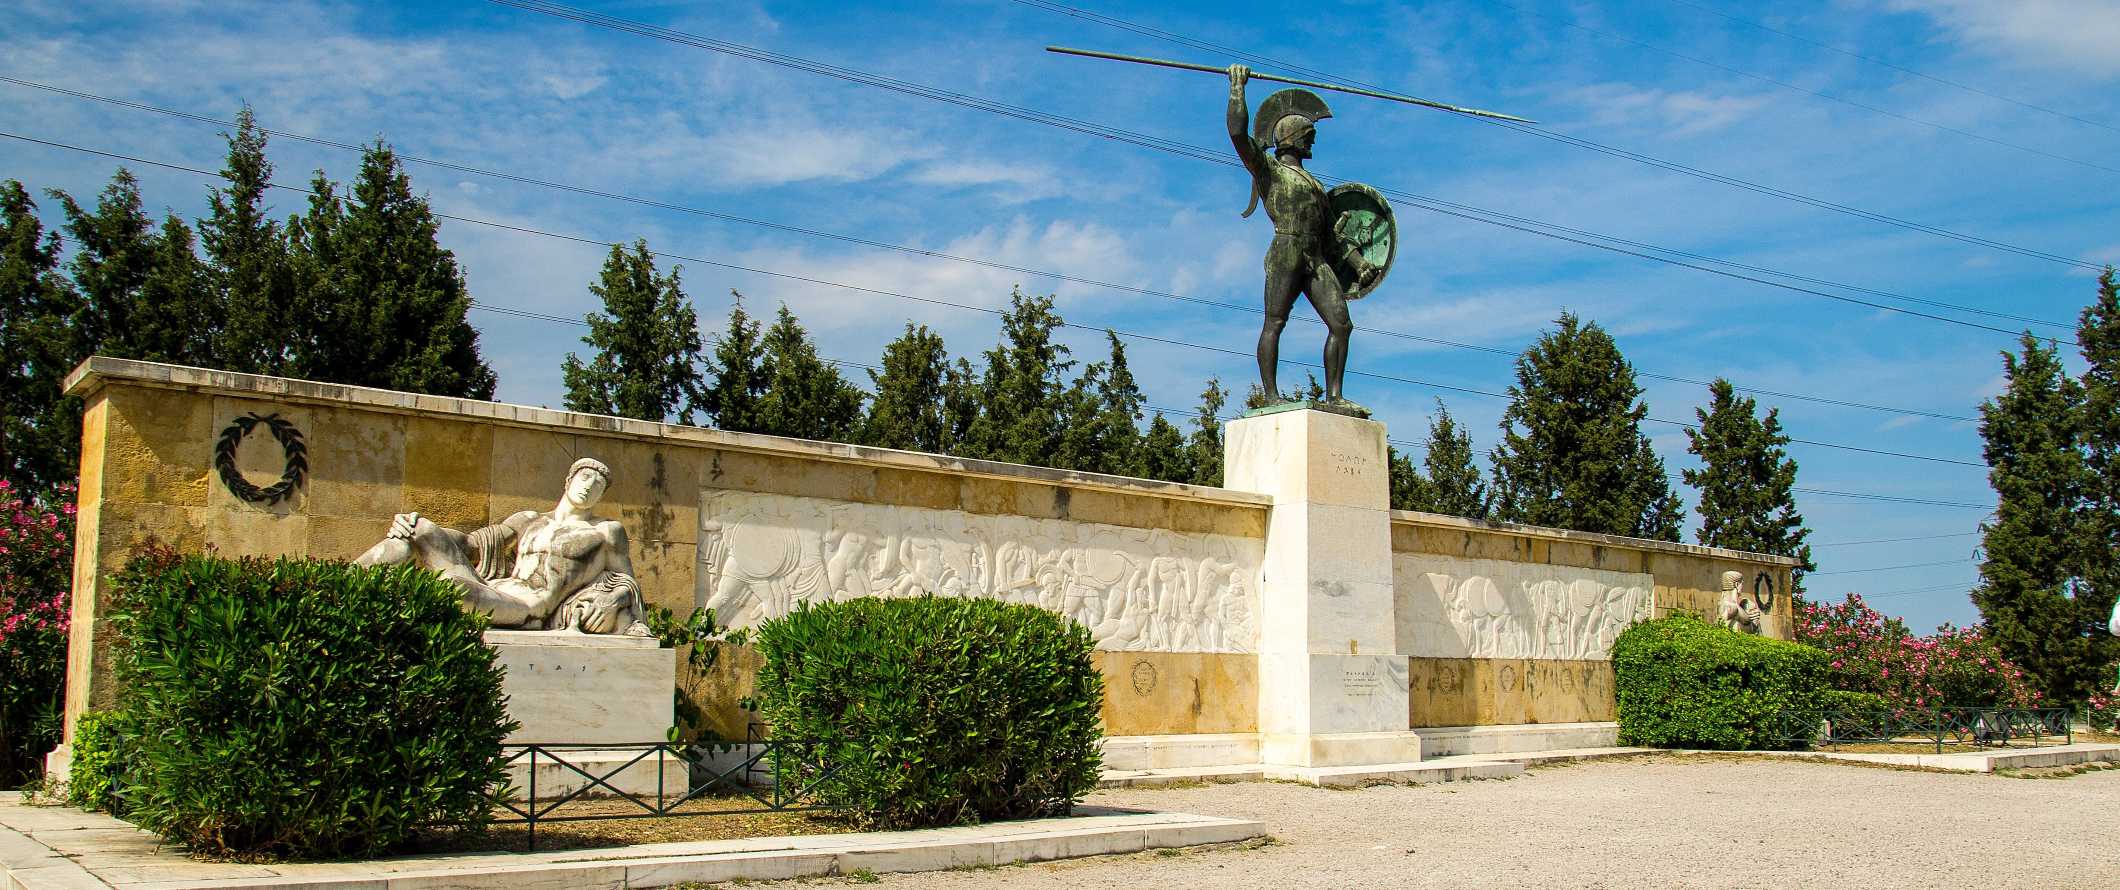 Statue of King Leonidas in Sparta, Greece.